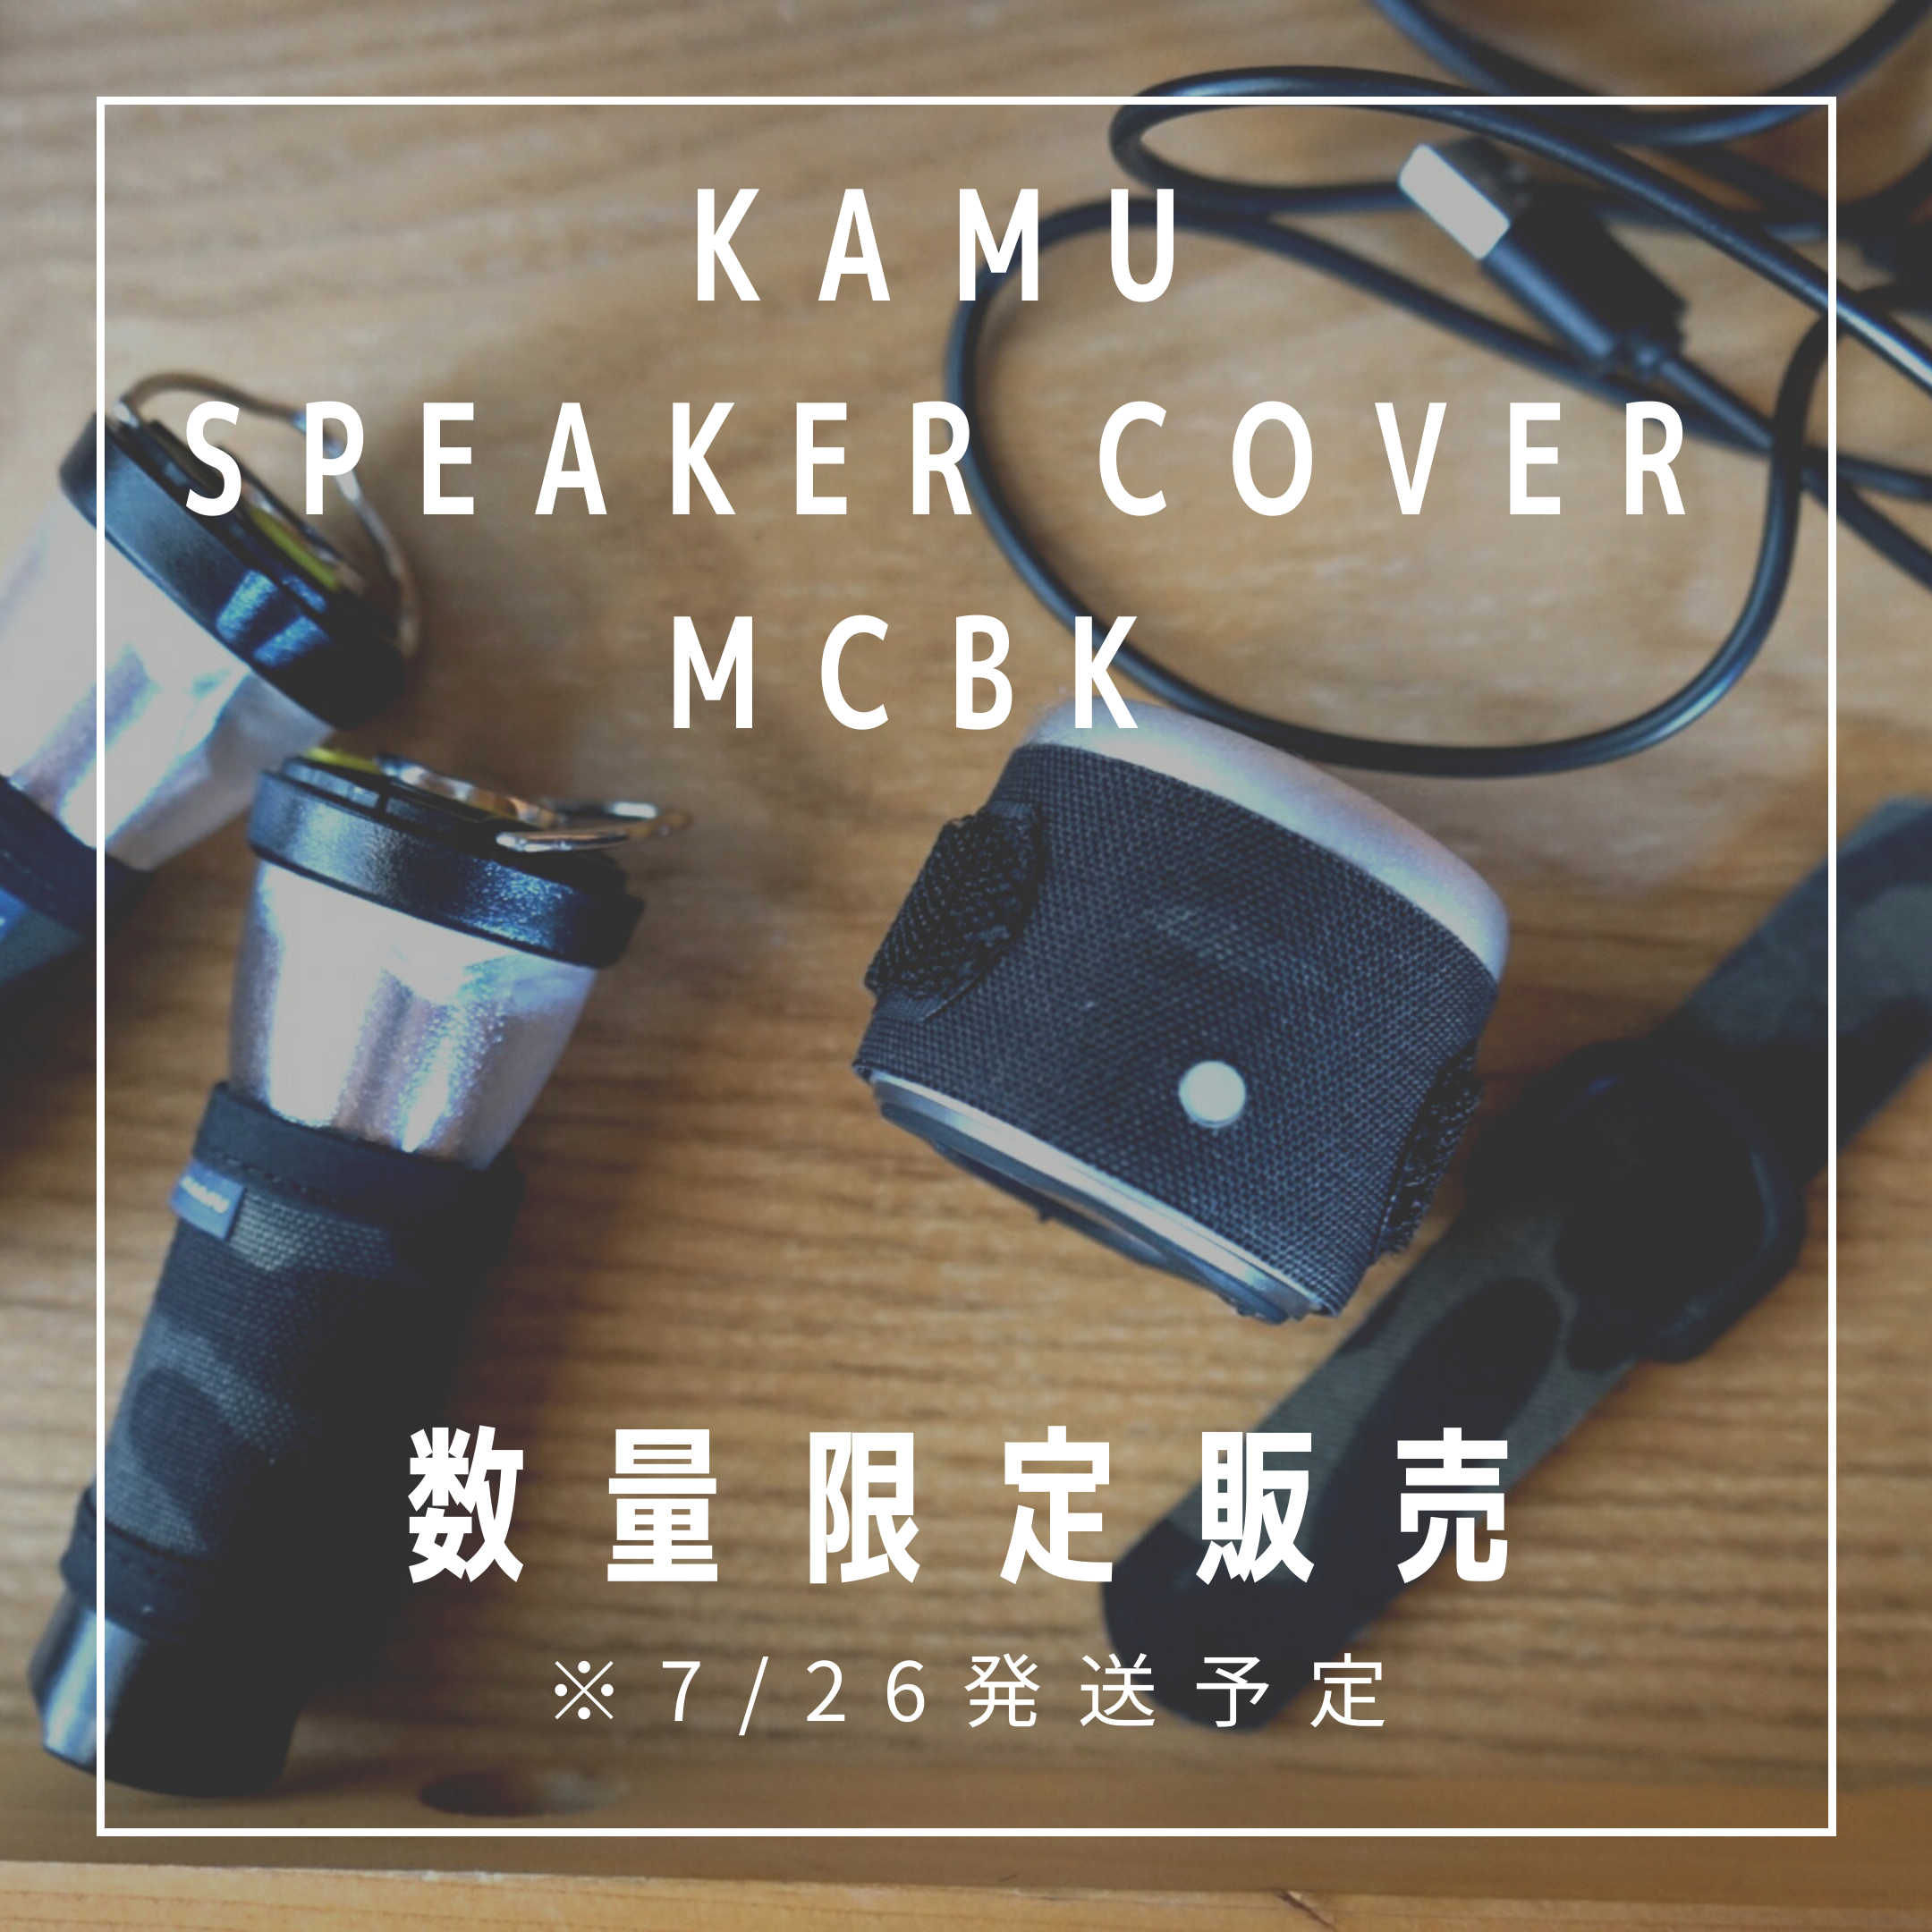 KAMU SC3 MCBK only 数量限定販売